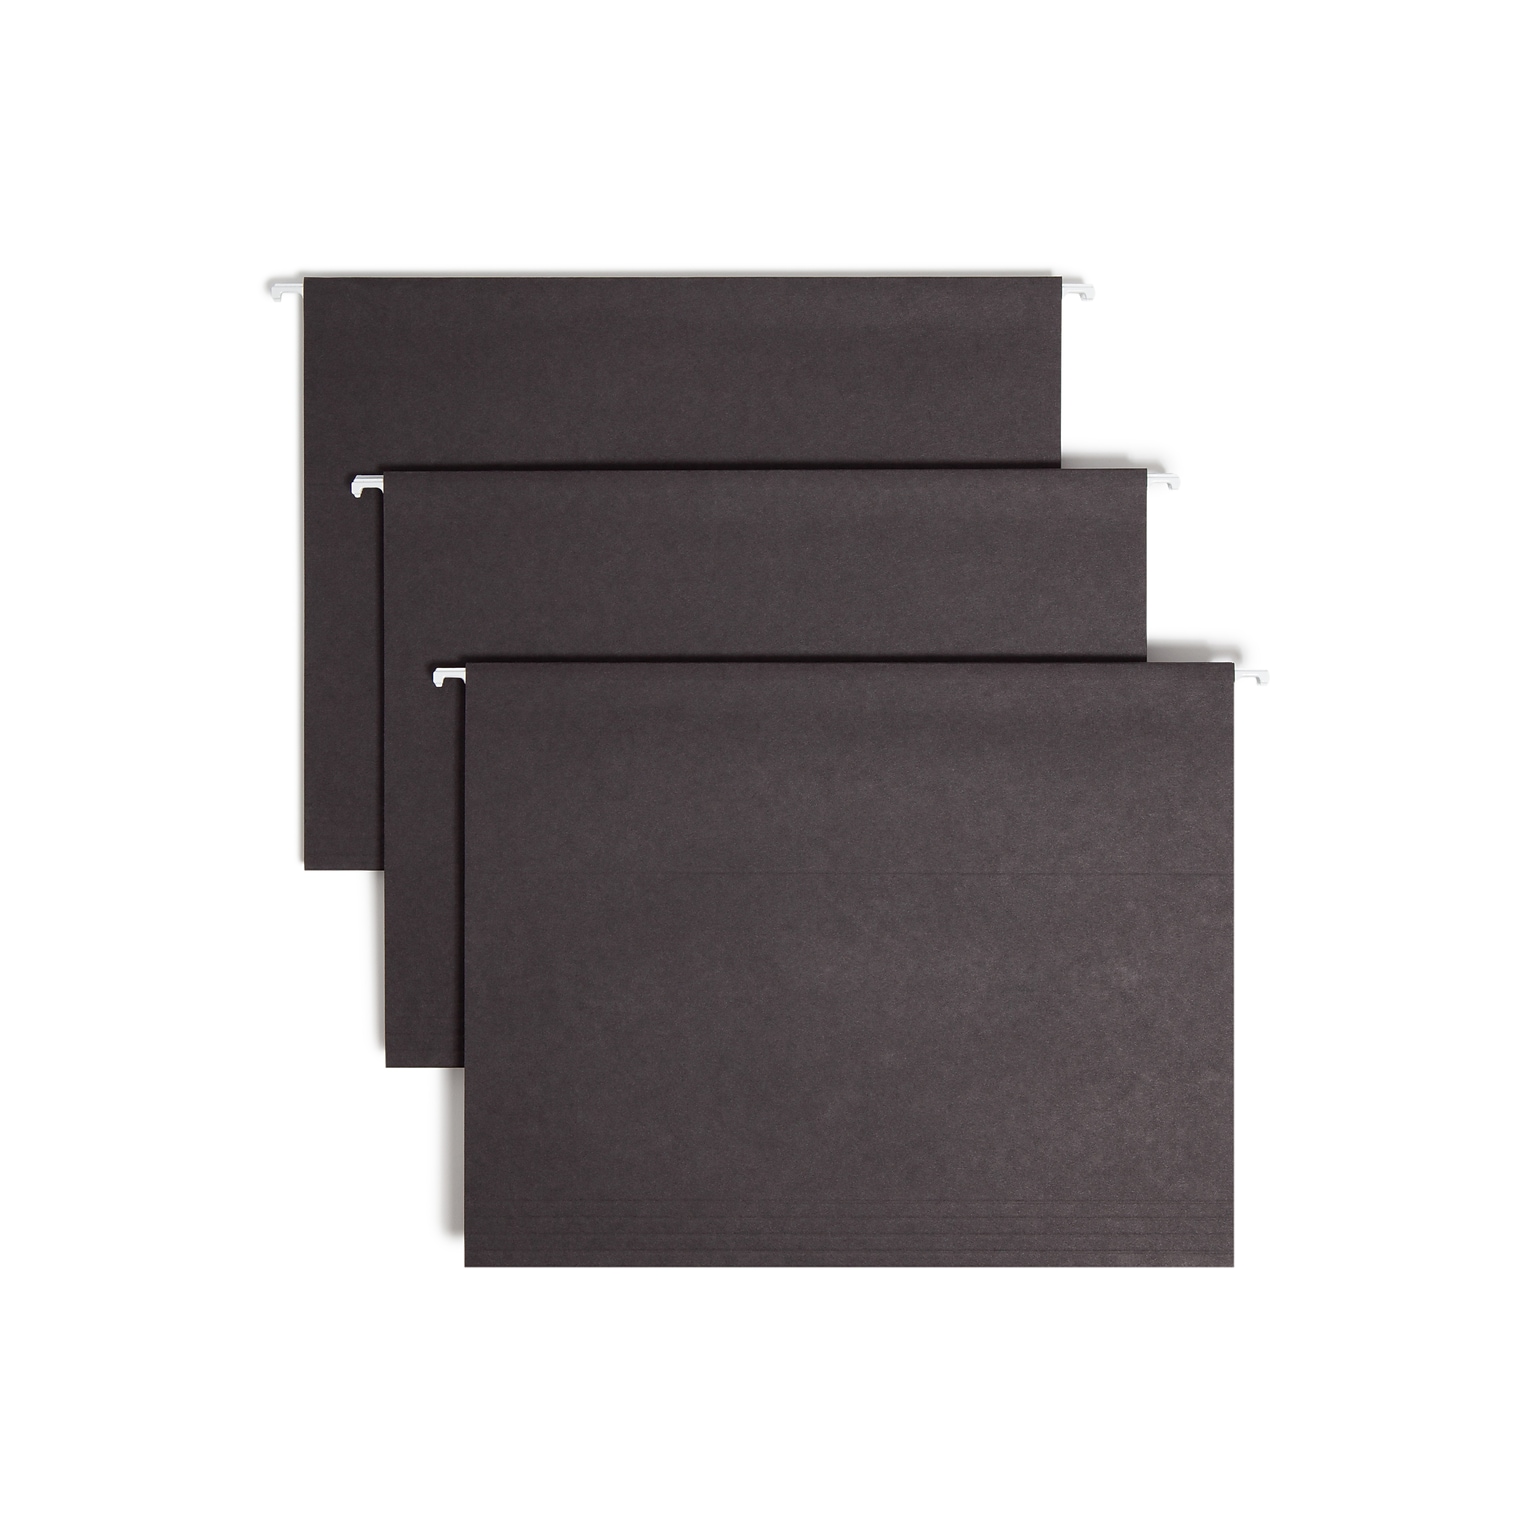 Smead Hanging File Folders, 1/5-Cut Adjustable Tab, Letter Size, Black, 25/Box (64062)